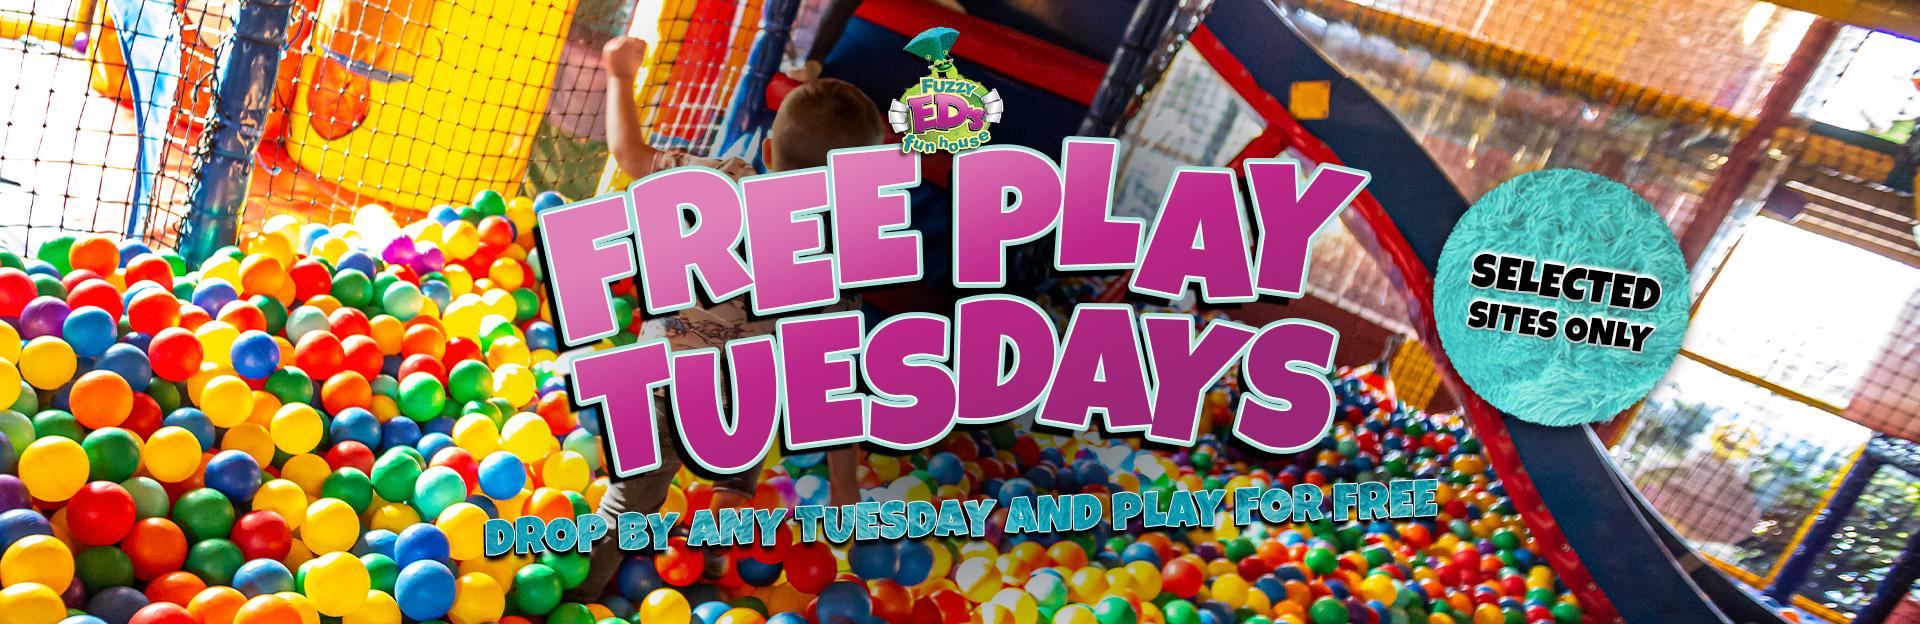 Enjoy free play on Tuesdays